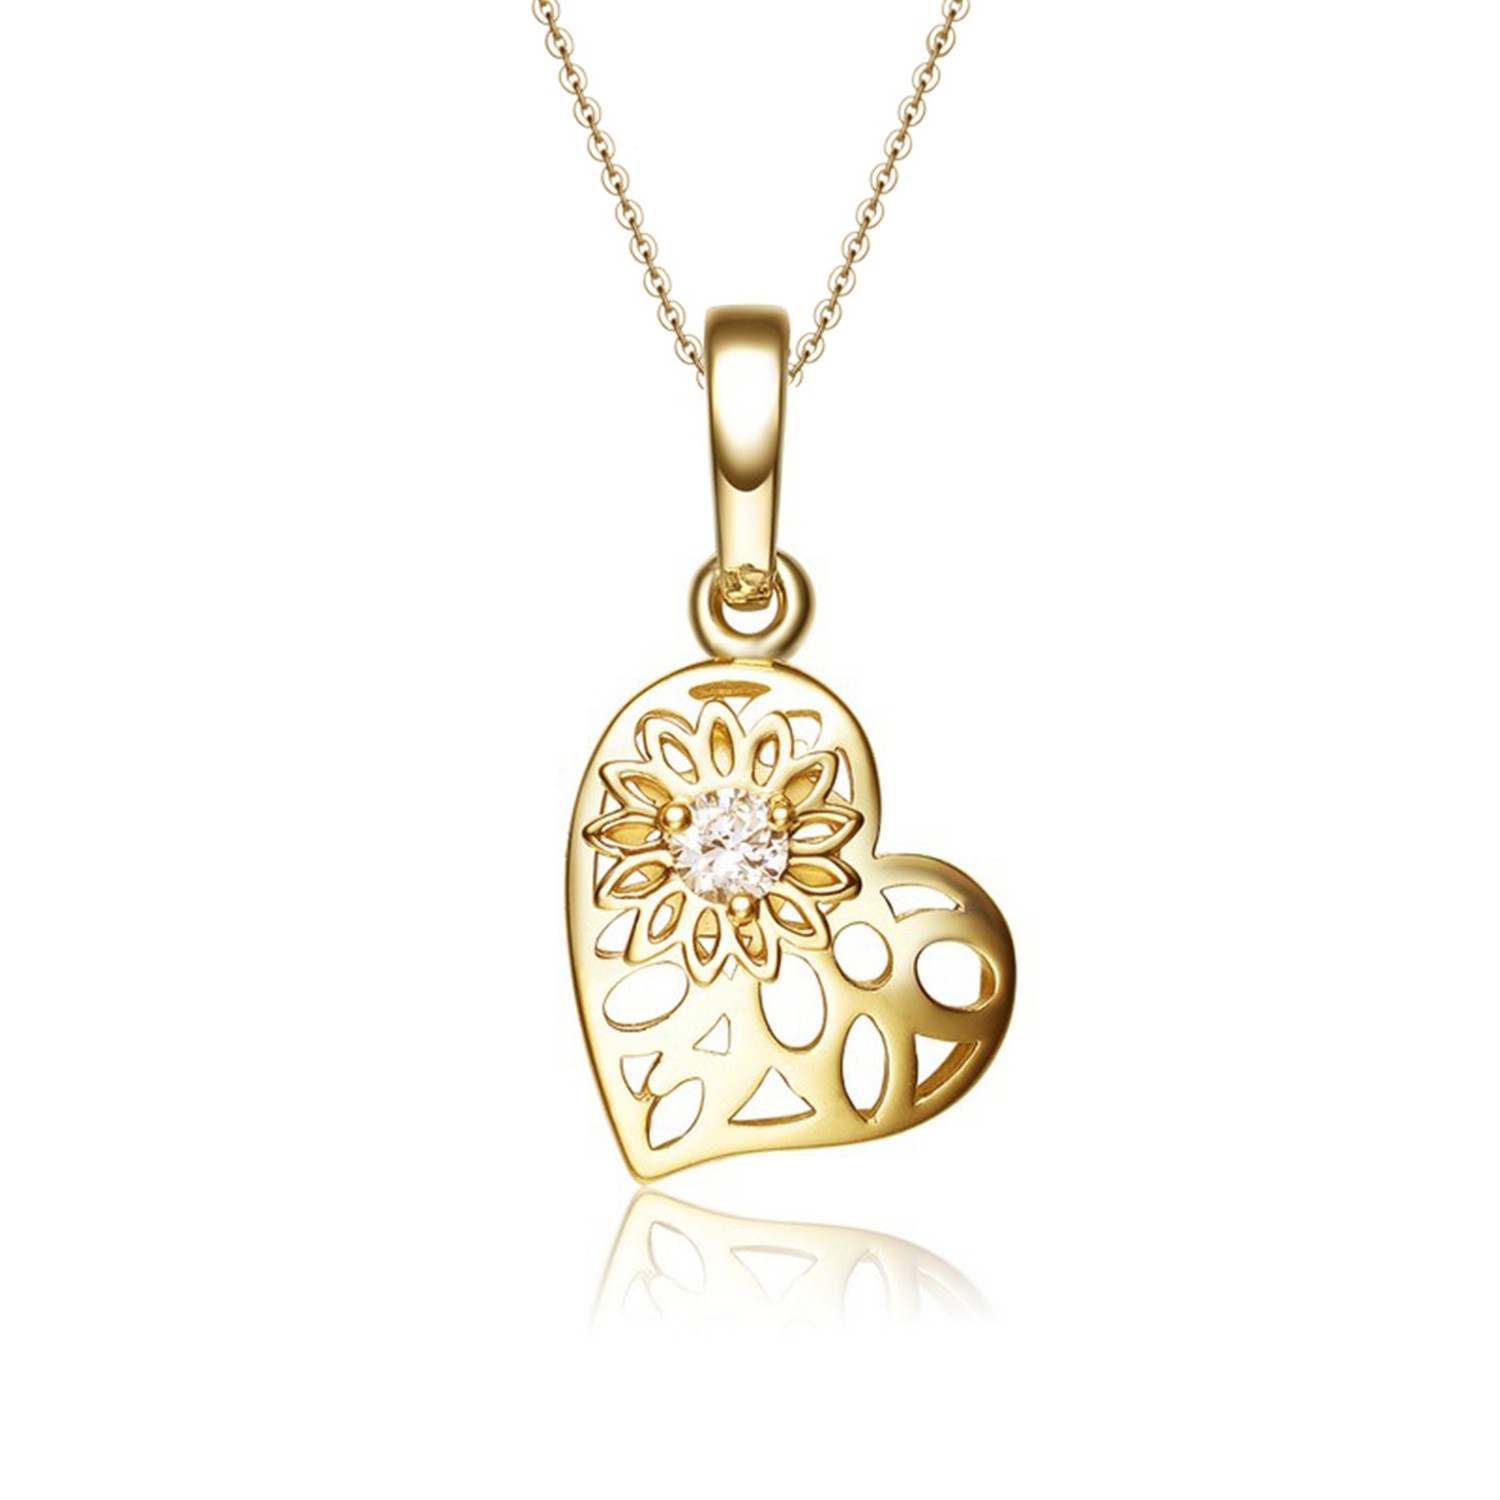 Elegant delicate women style 925 sterling silver 18K Gold Plated cubic zirconia love heart pendant 